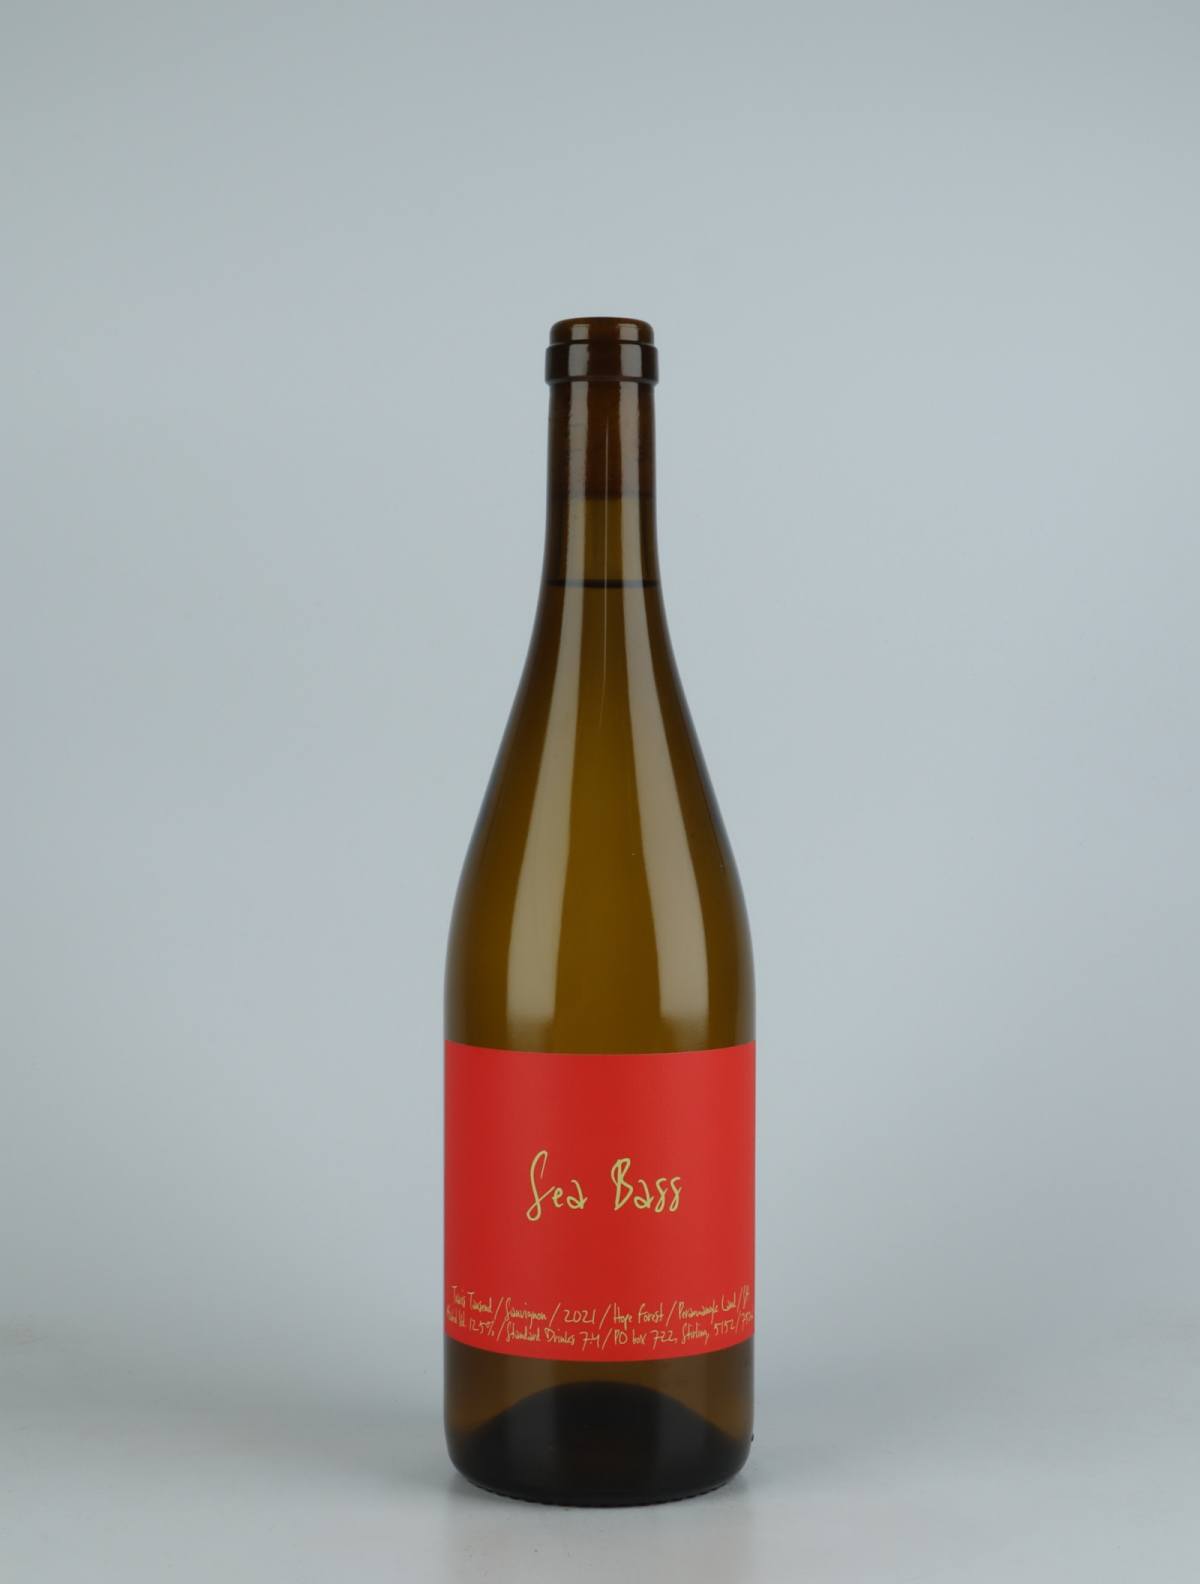 A bottle 2021 Sea Bass Sauvignon Blanc Orange wine from Travis Tausend, Adelaide Hills in Australia